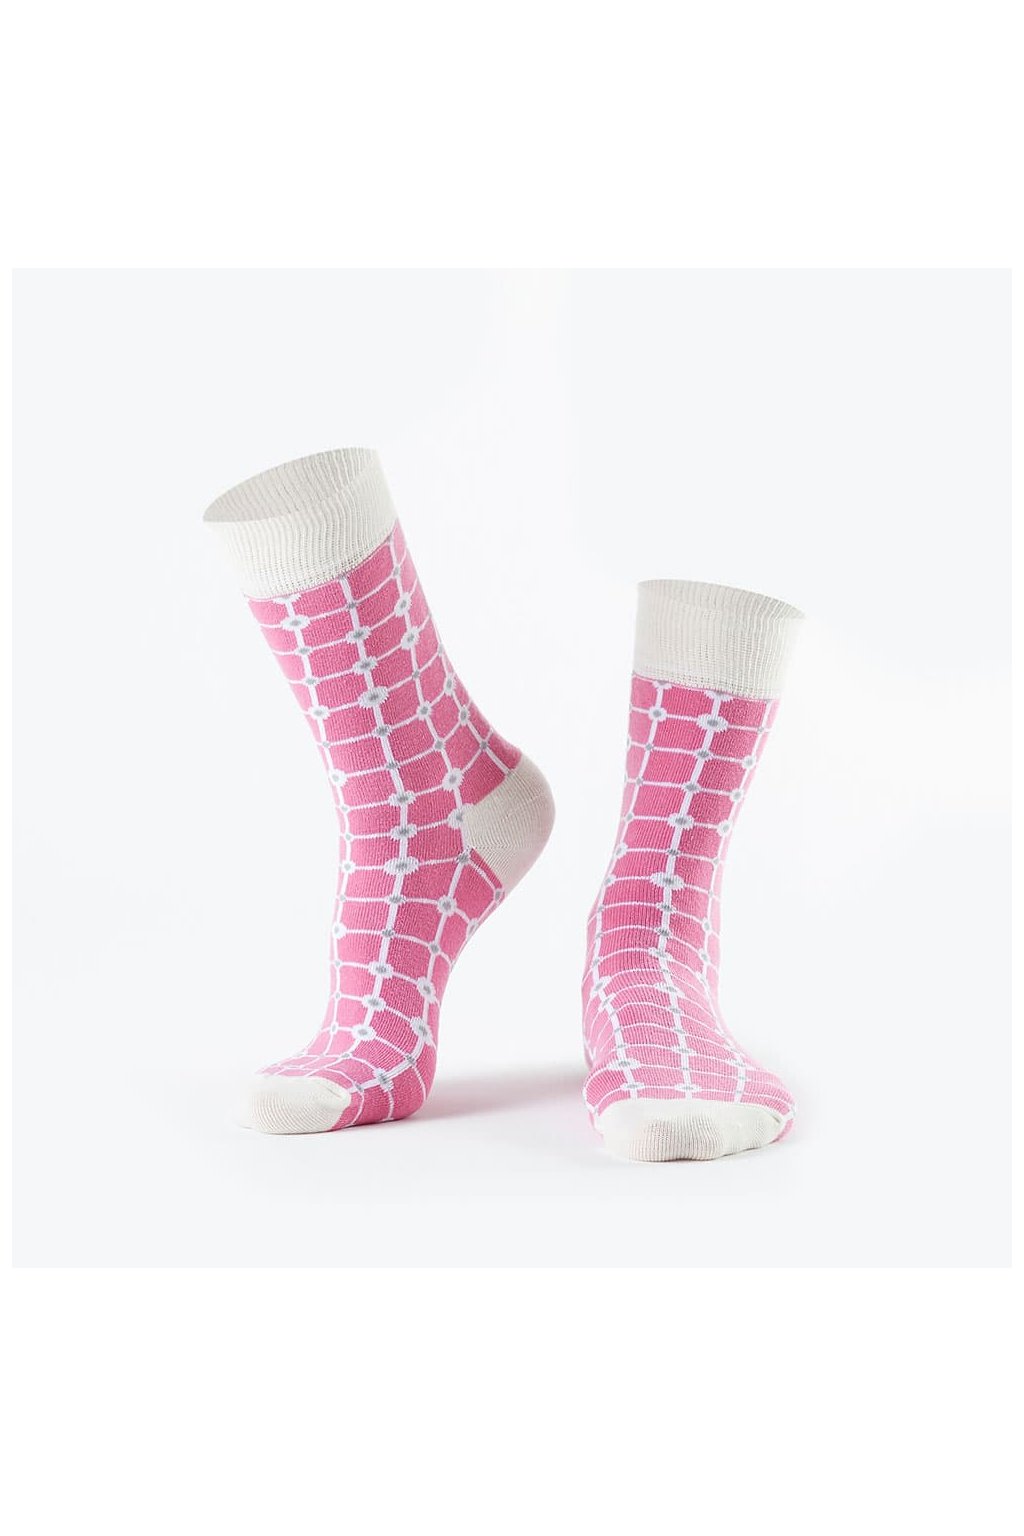 Dámské klasické růžové kostkované ponožky